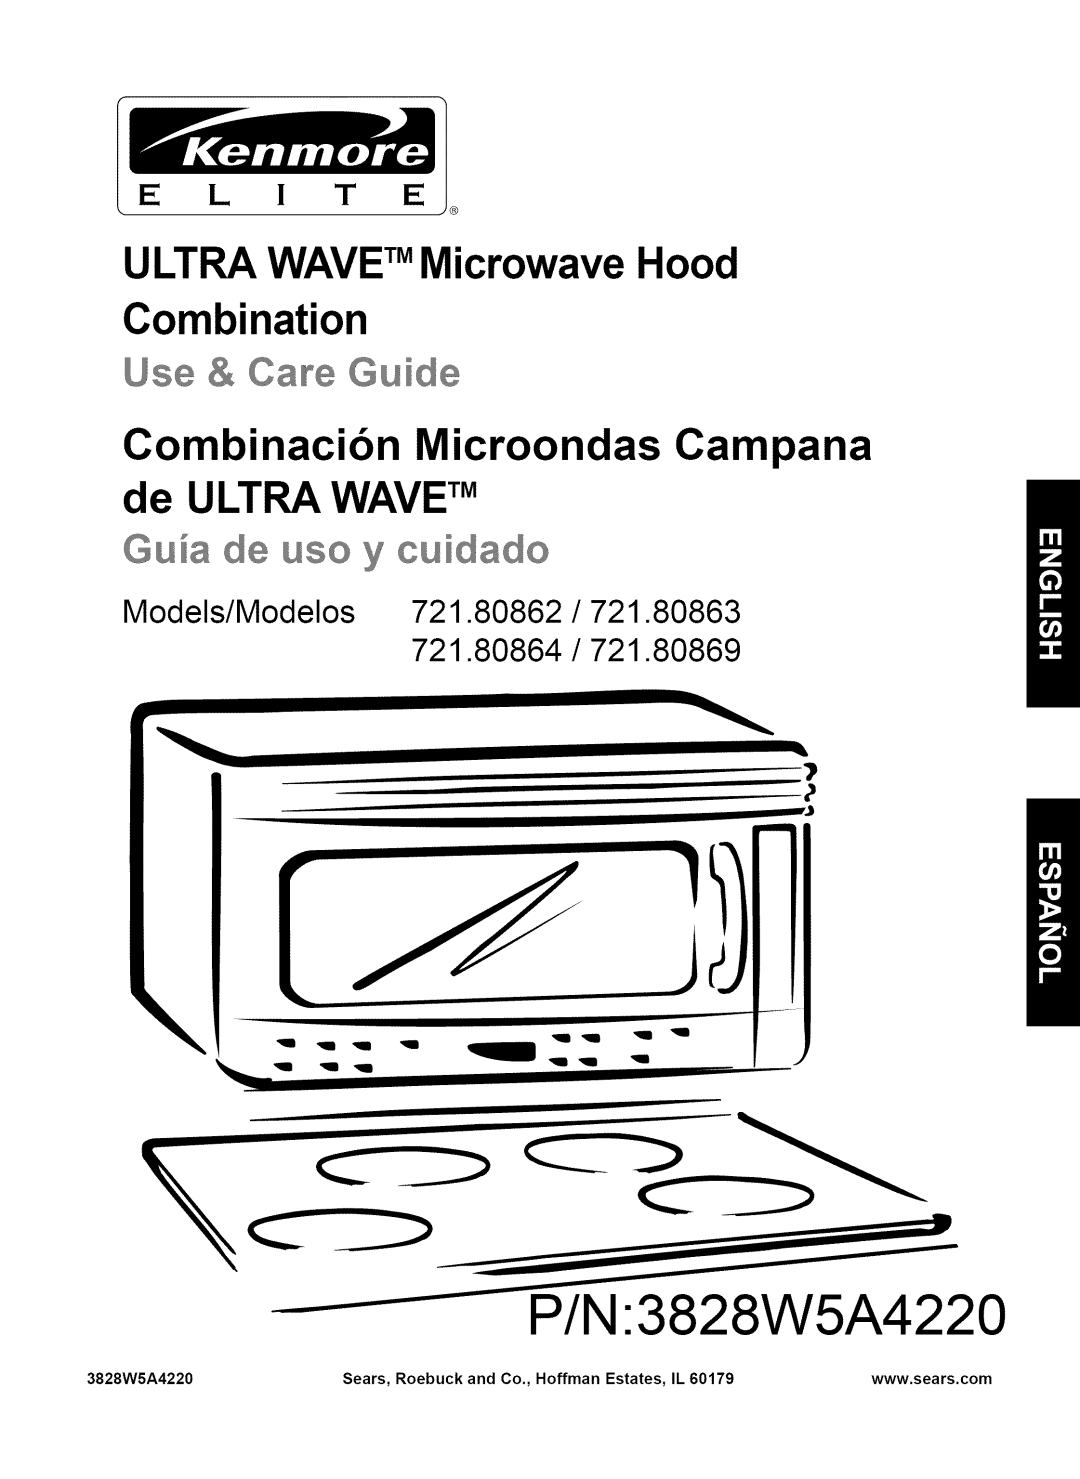 Kenmore 721.80863 manual ULTRA WAVE TMMicrowave Hood Combination, Combinacibn Microondas Campana de ULTRA WAVETM, E L I T 